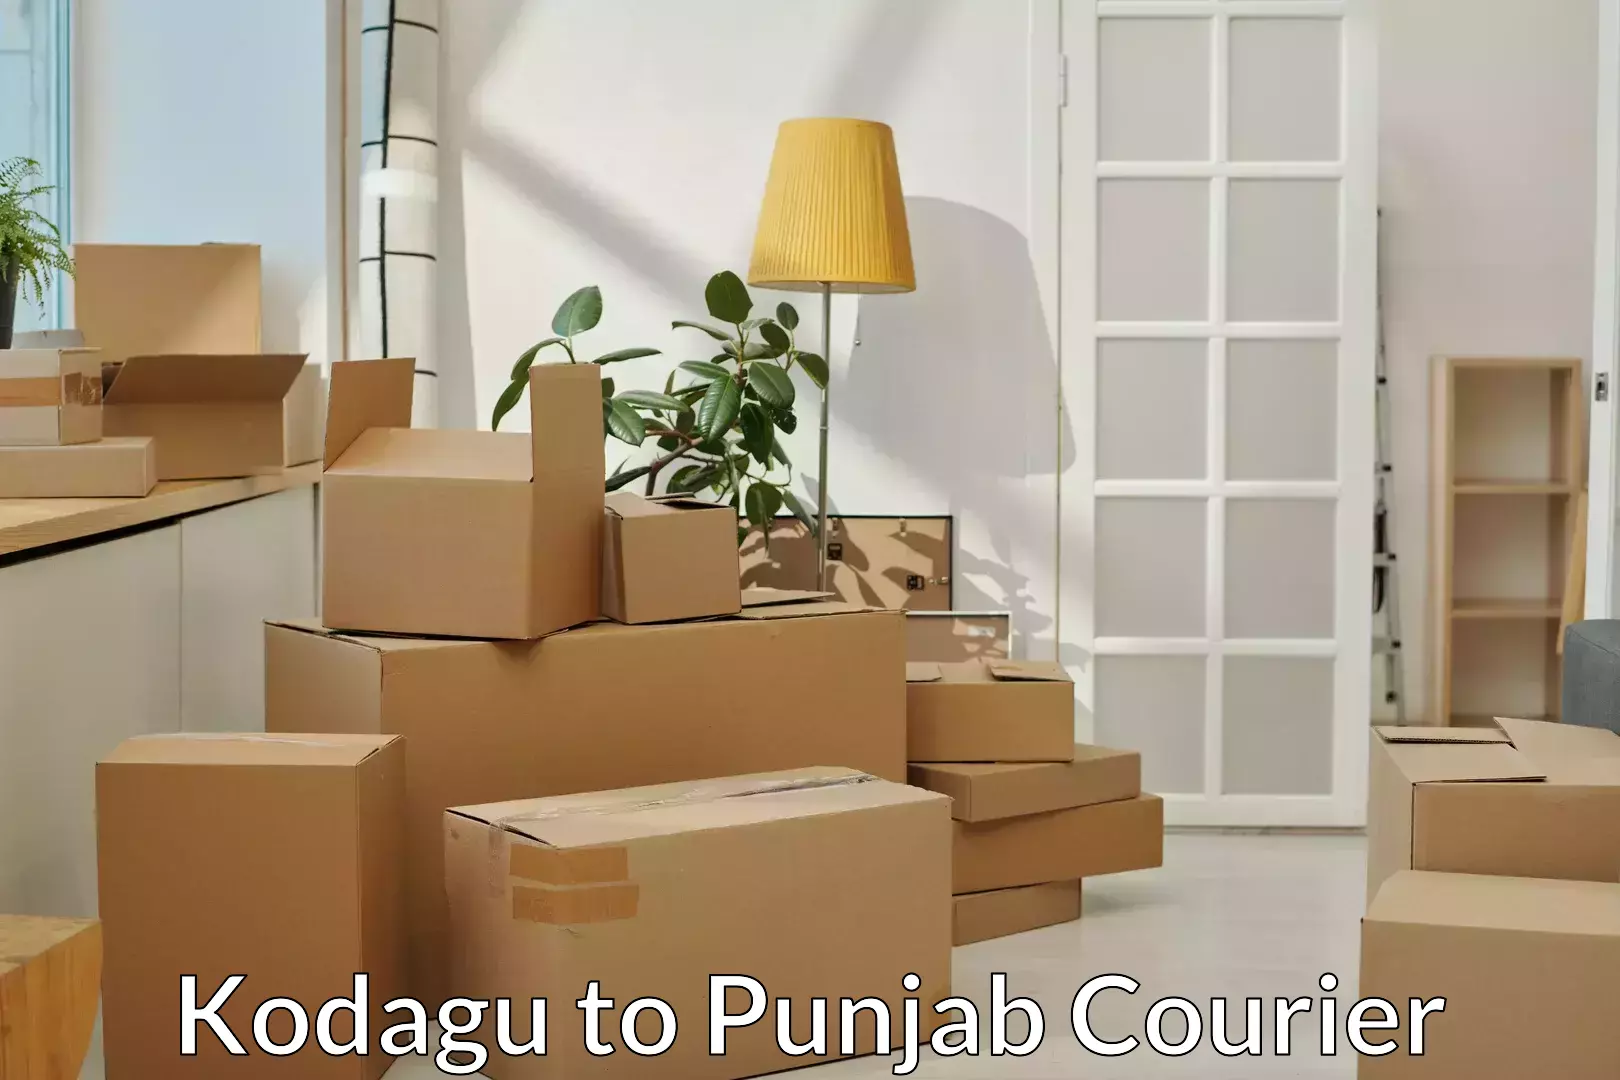 Professional moving company Kodagu to Punjab